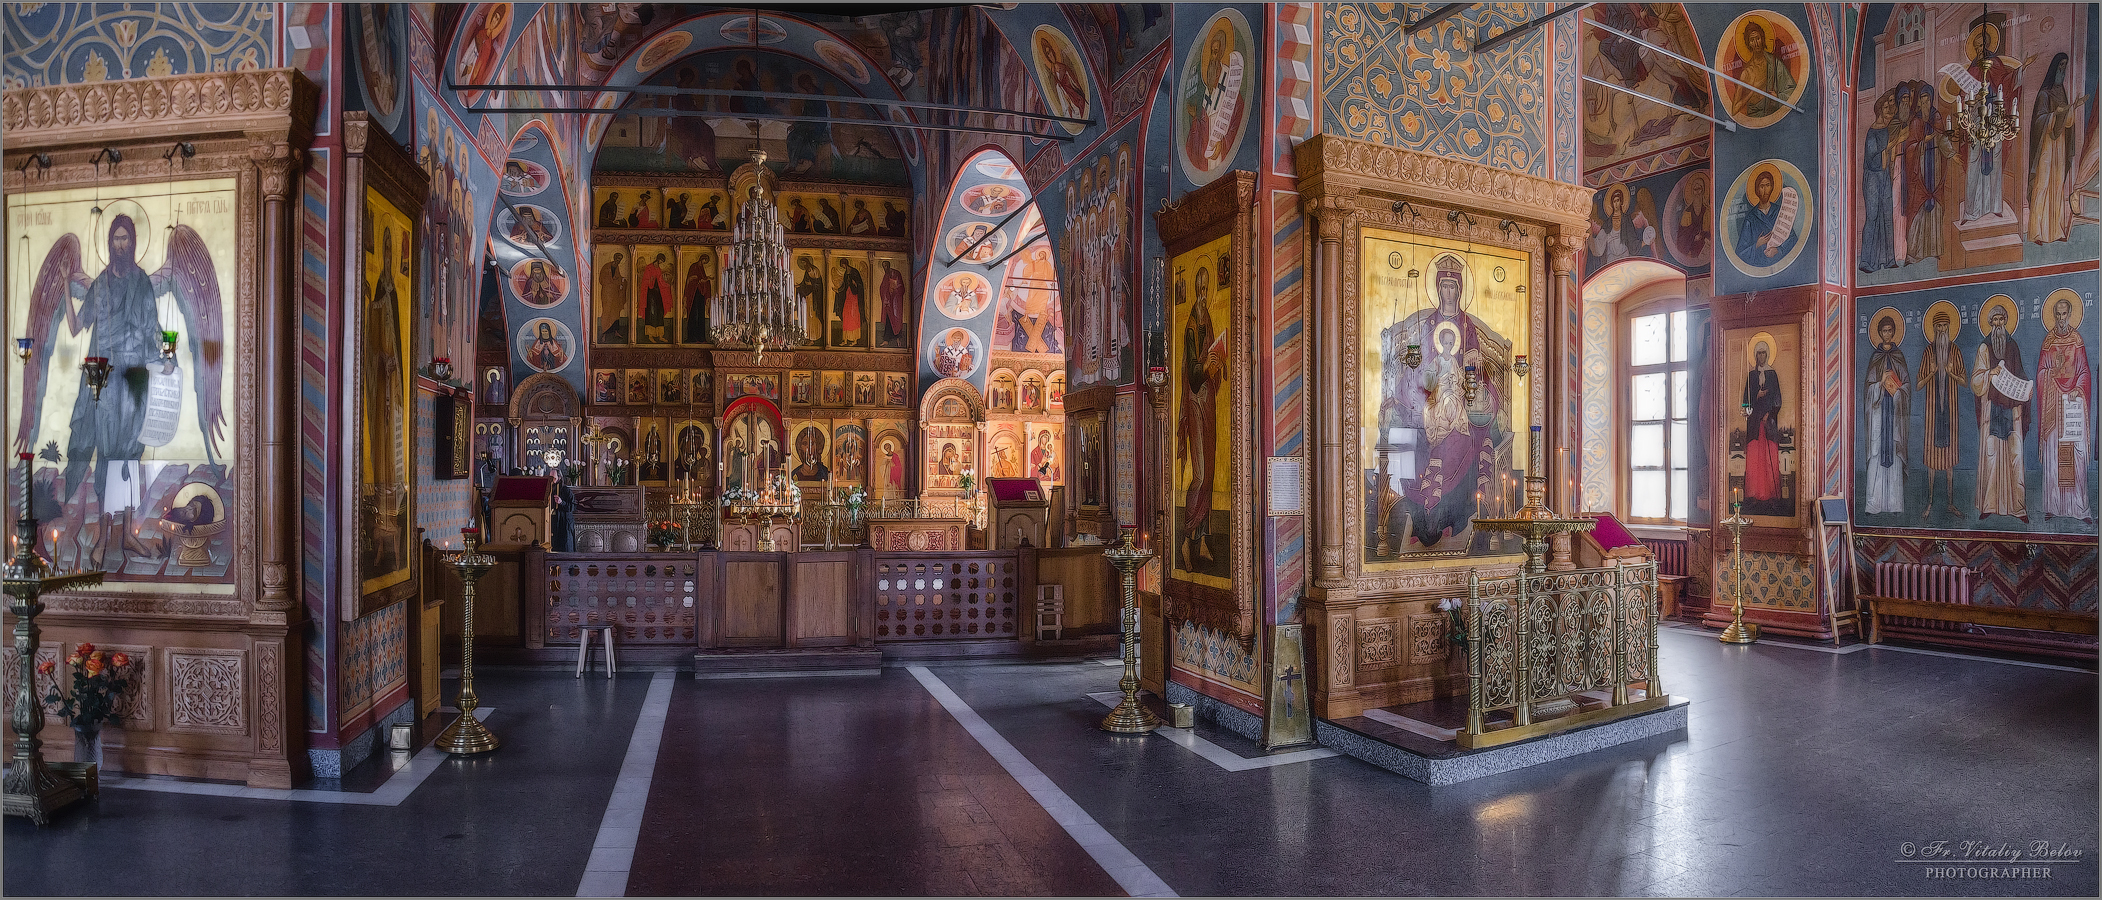 Интерьер Казанского храма монастыря Оптина пустынь